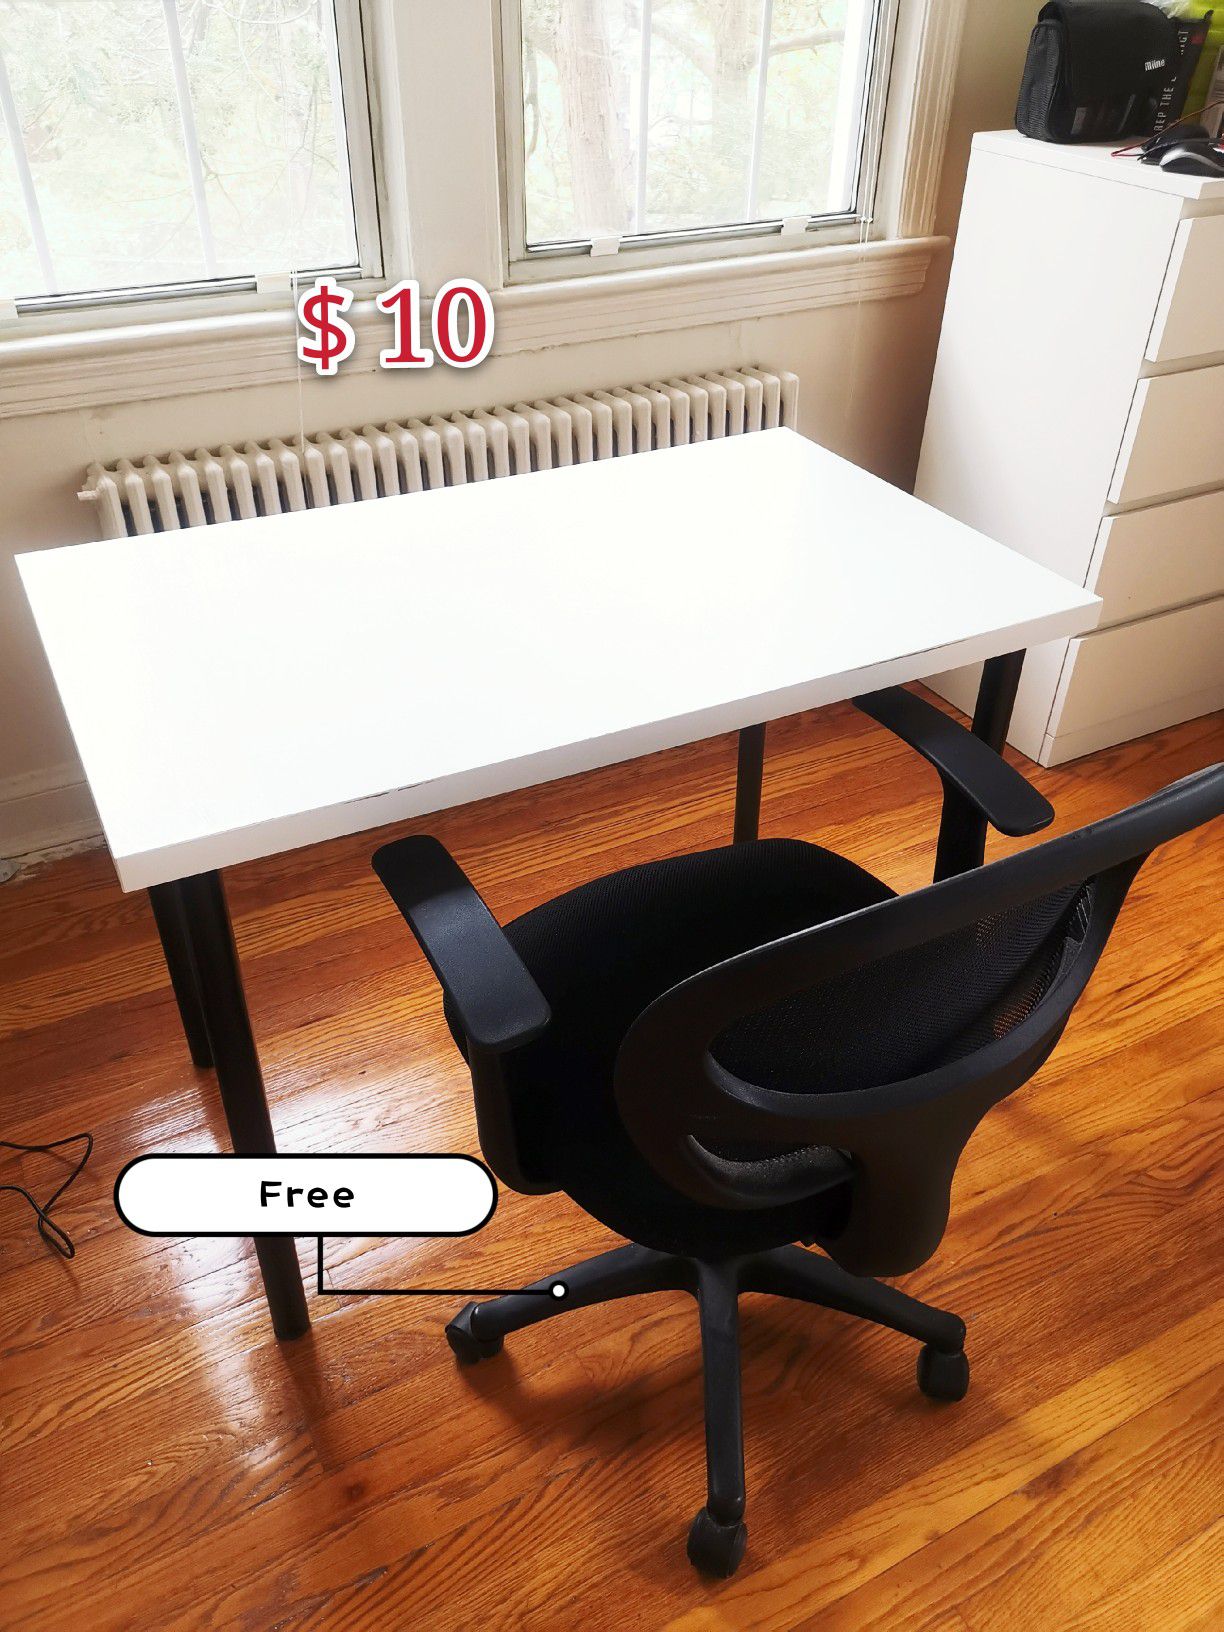 Desk,free chair